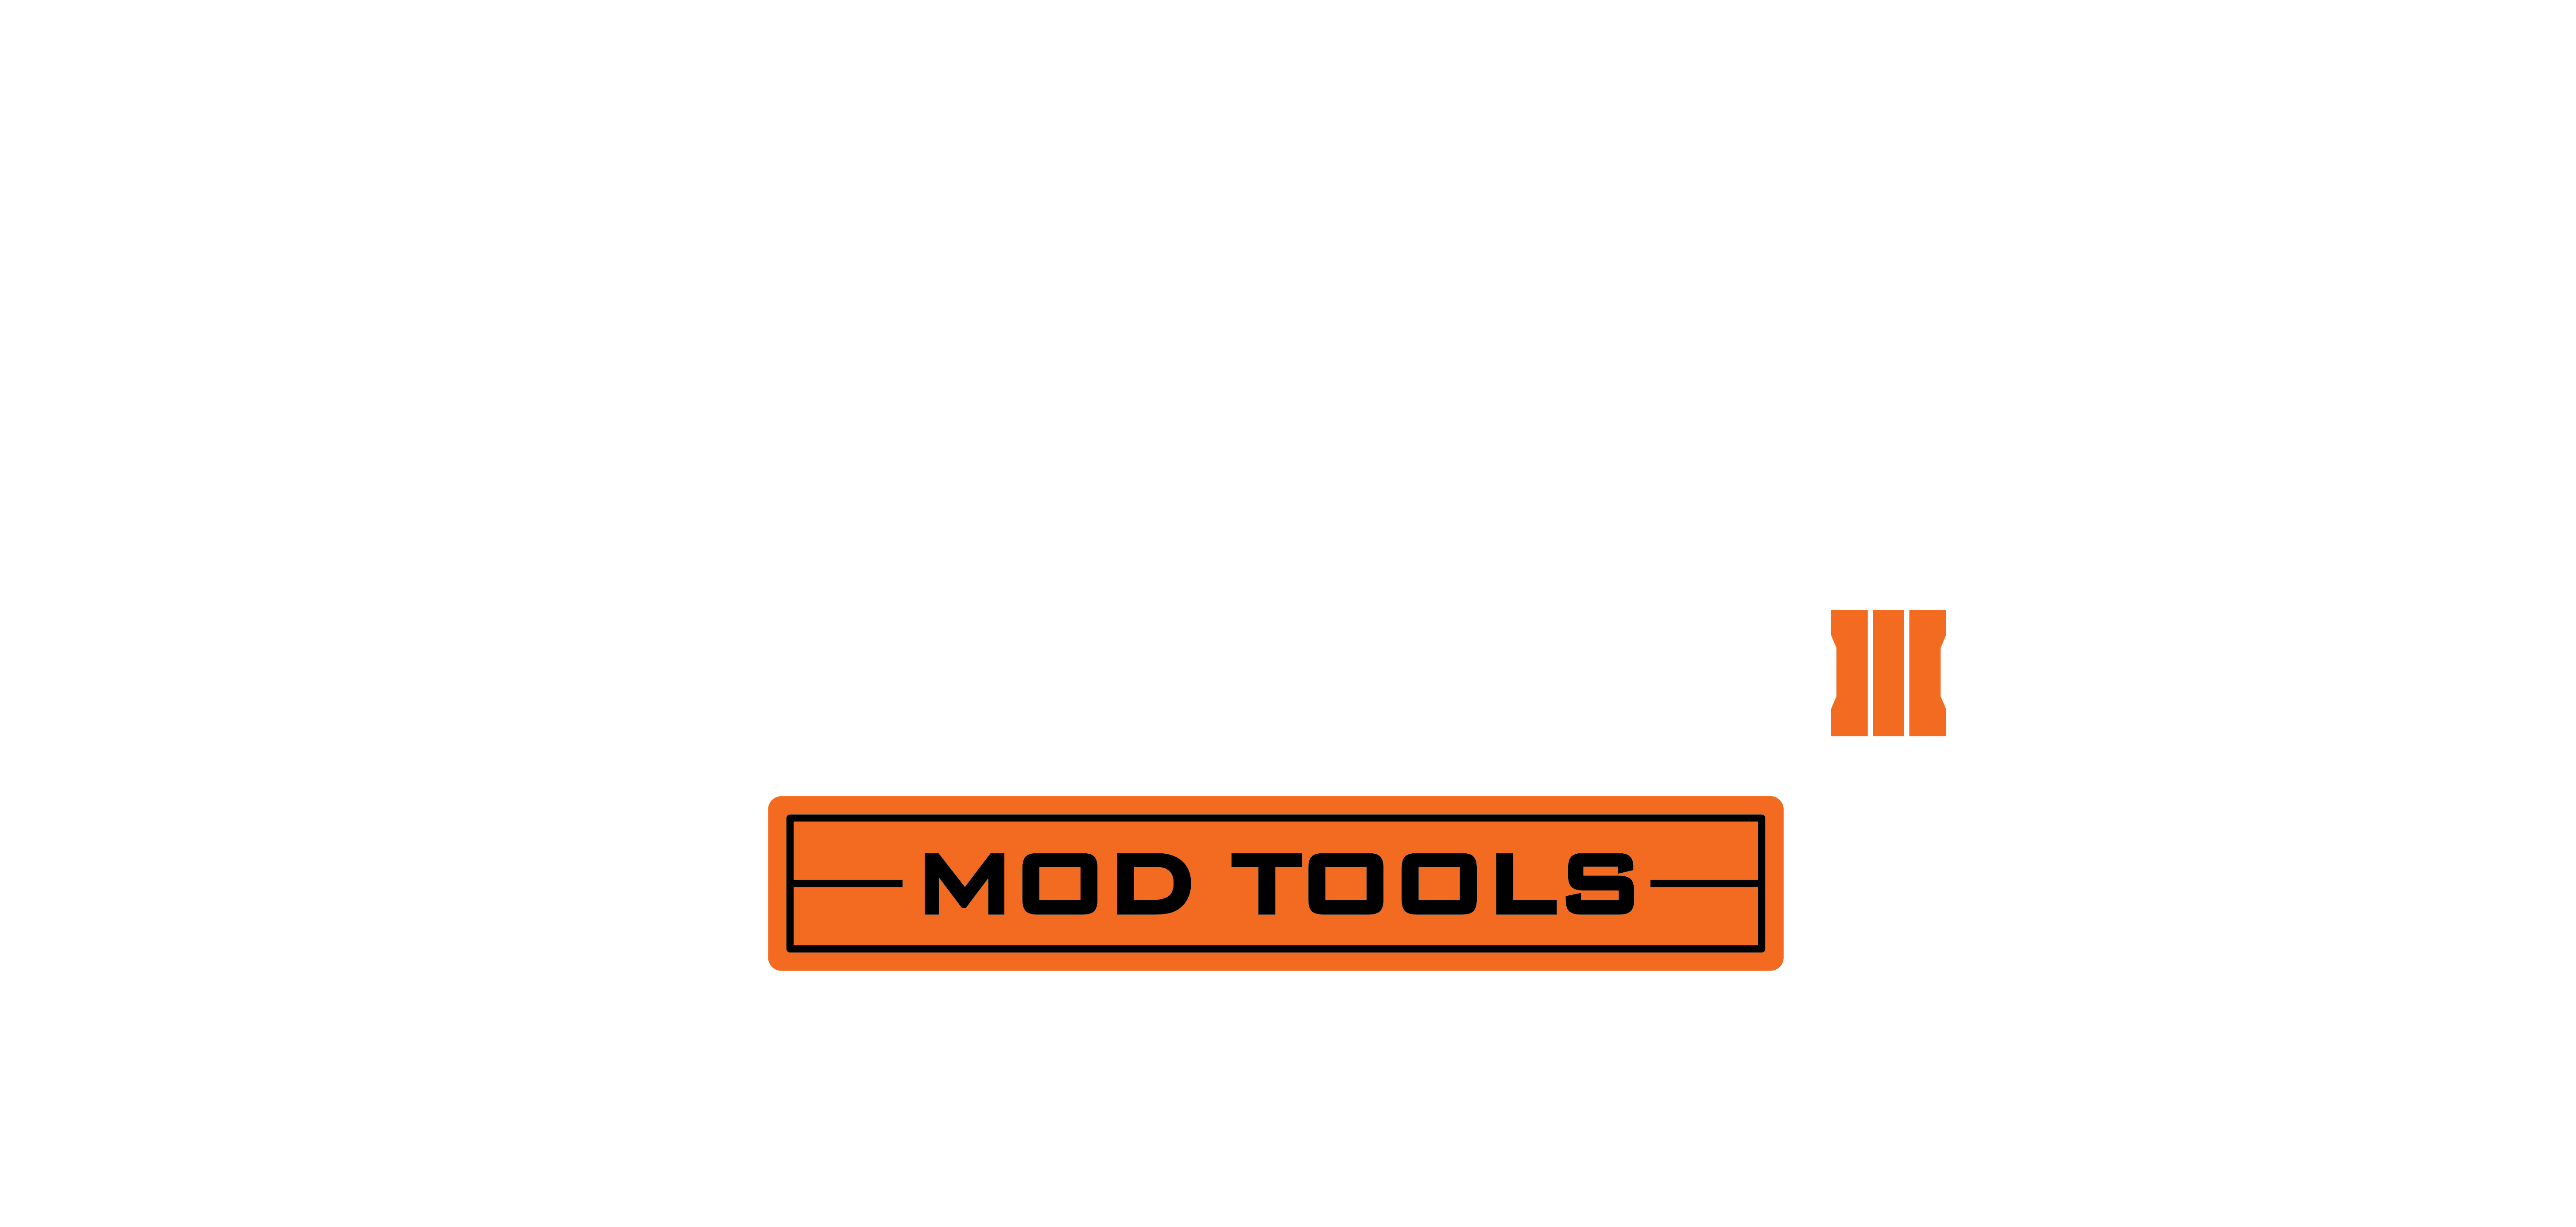 black ops mods pc